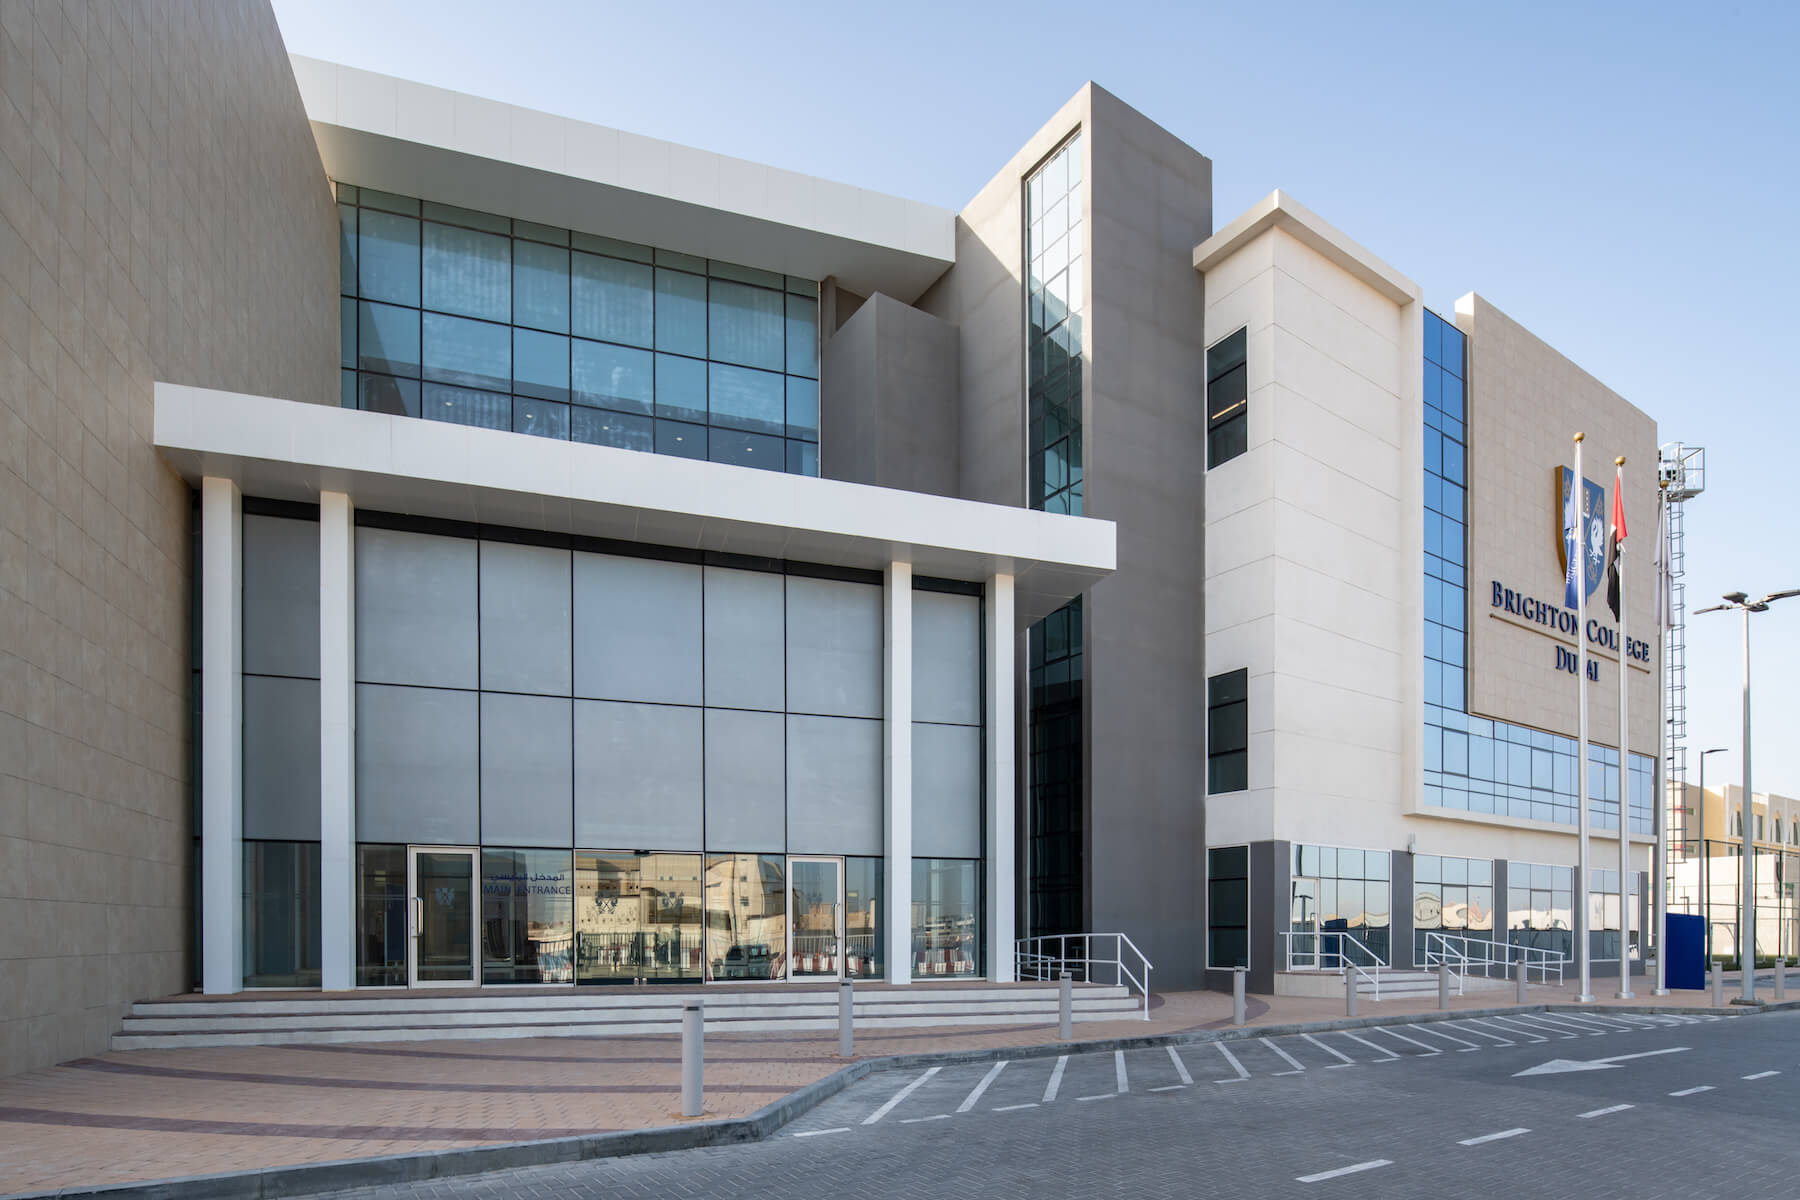 Brighton College Dubai Main Entrance.jpg